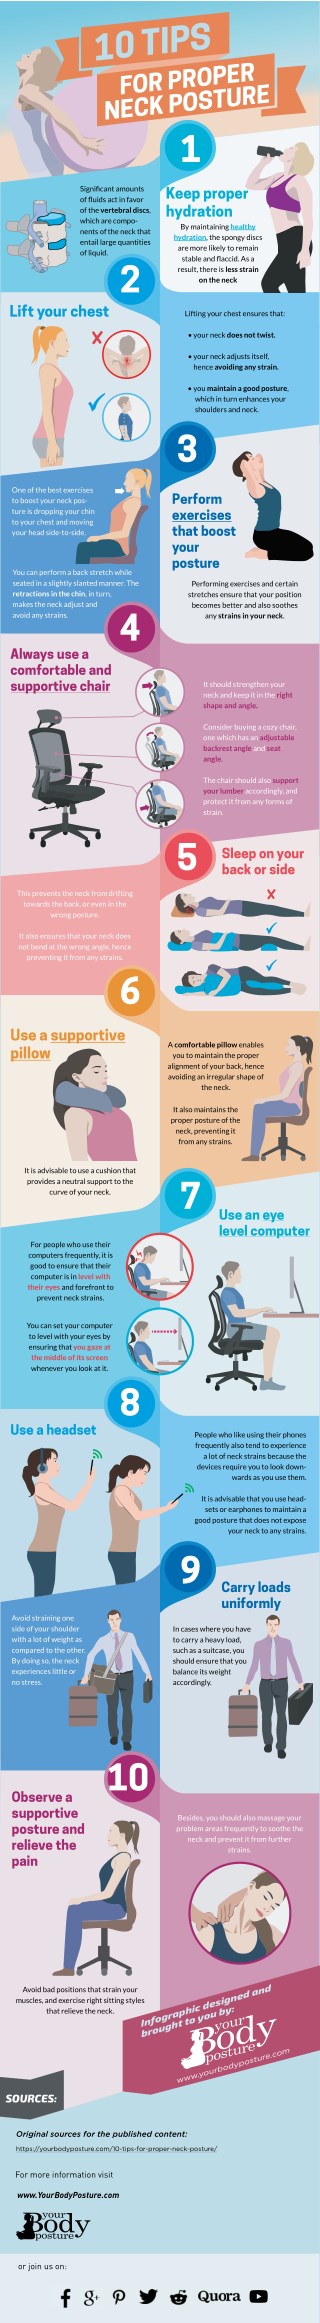 Top 10 Tips For Proper Neck Posture